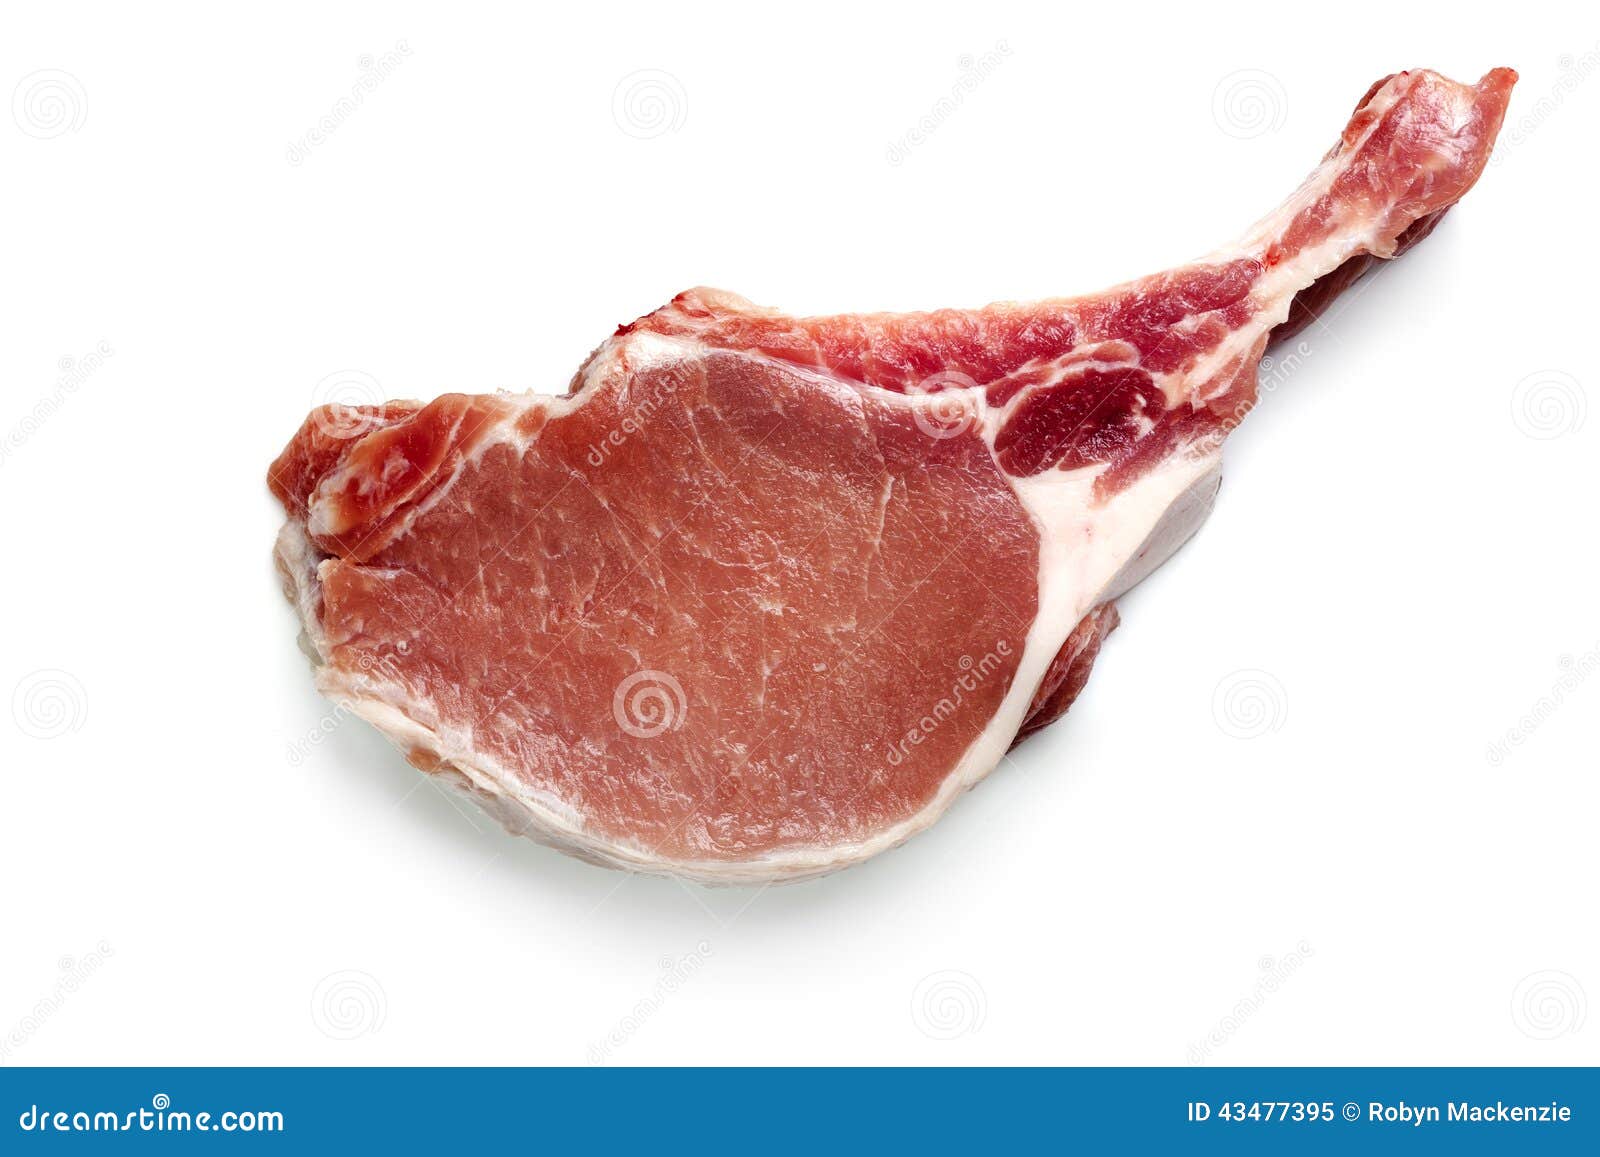 Close-up Of Raw Pork Chop 1269941 Stock Photo At Vecteezy